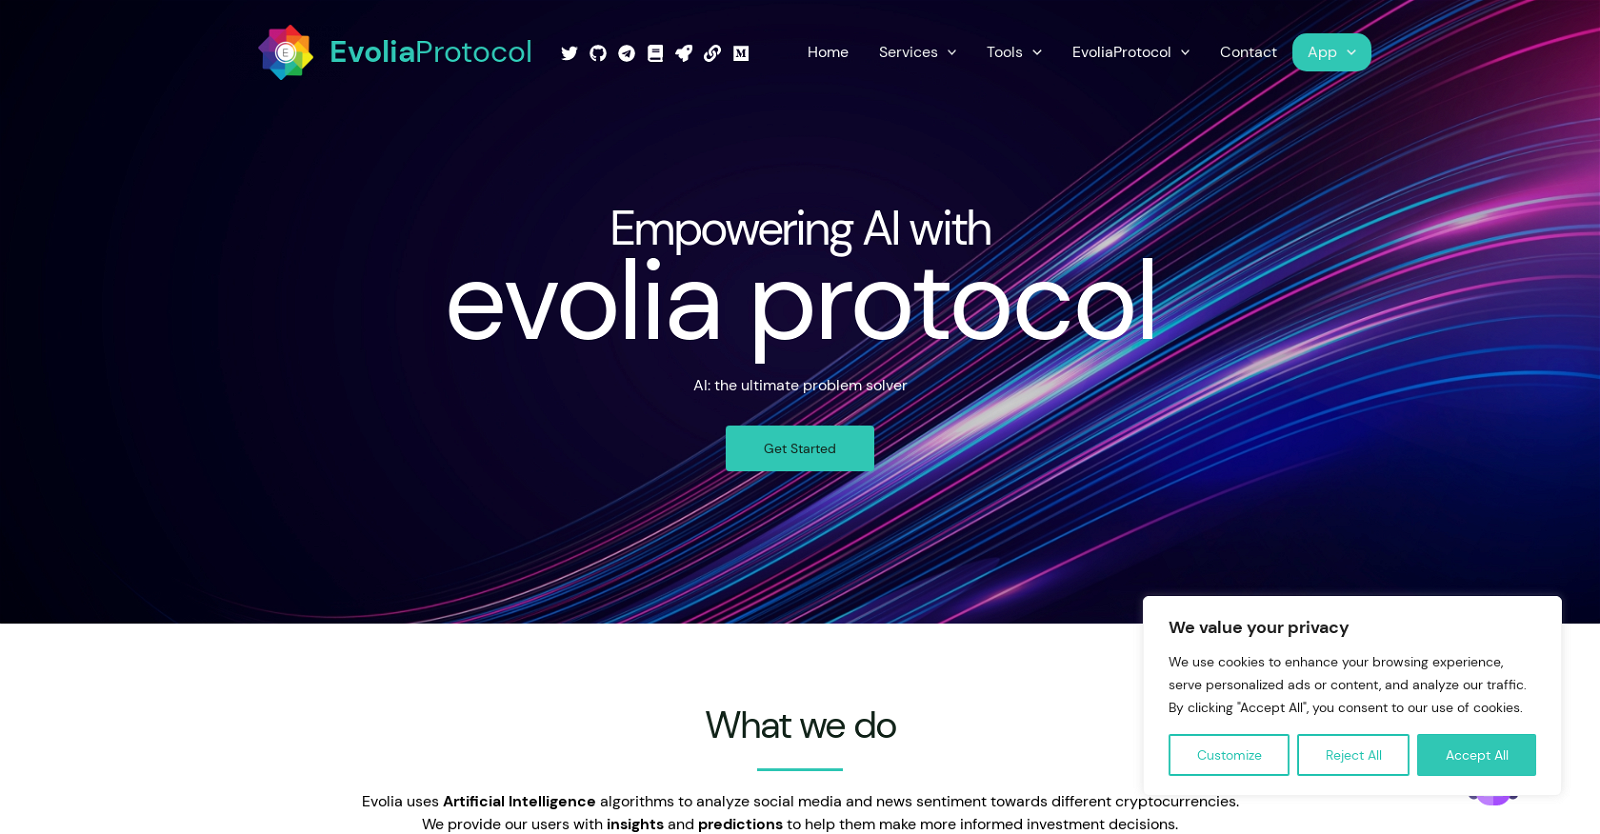 Evoliaprotocol website